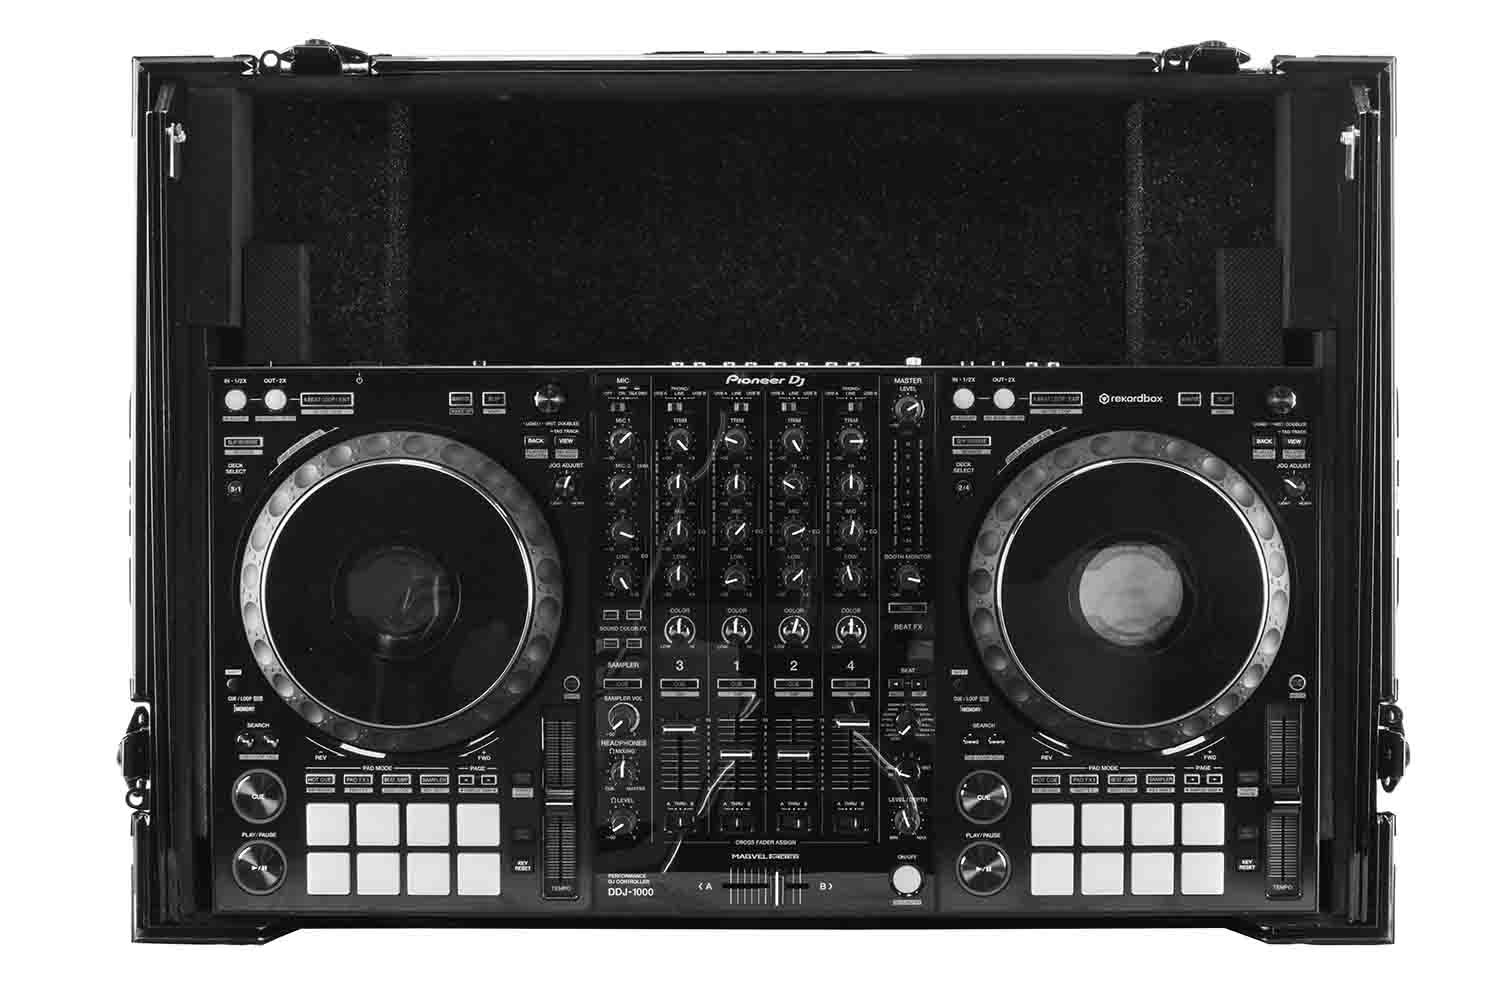 Odyssey FZGSDDJ1000WBL Glide Style DJ Case for Pioneer DDJ-1000 / DDJ-1000SRT DJ Controller - Black - Hollywood DJ